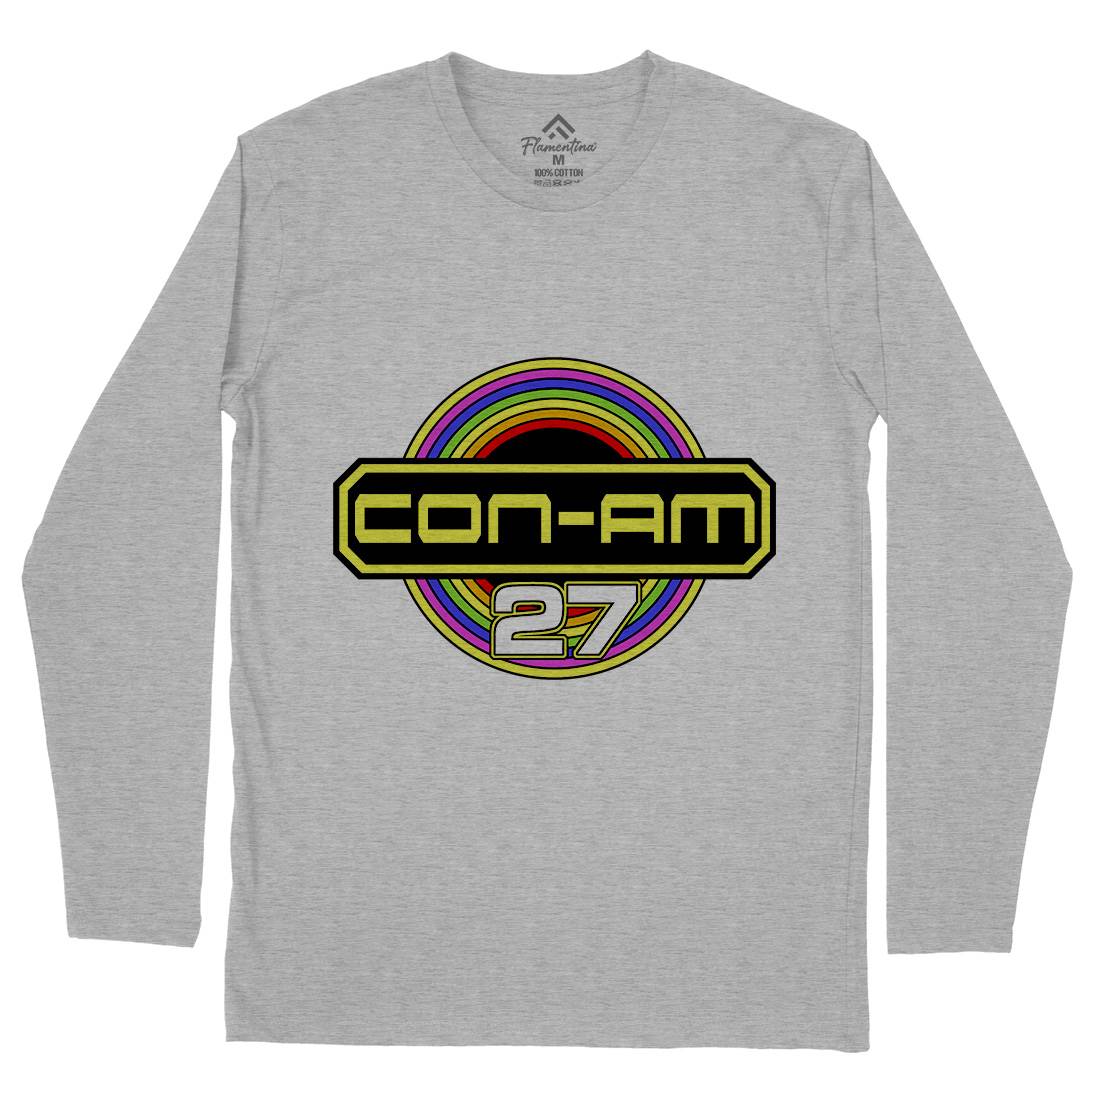 Con-Am 27 Mens Long Sleeve T-Shirt Space D414